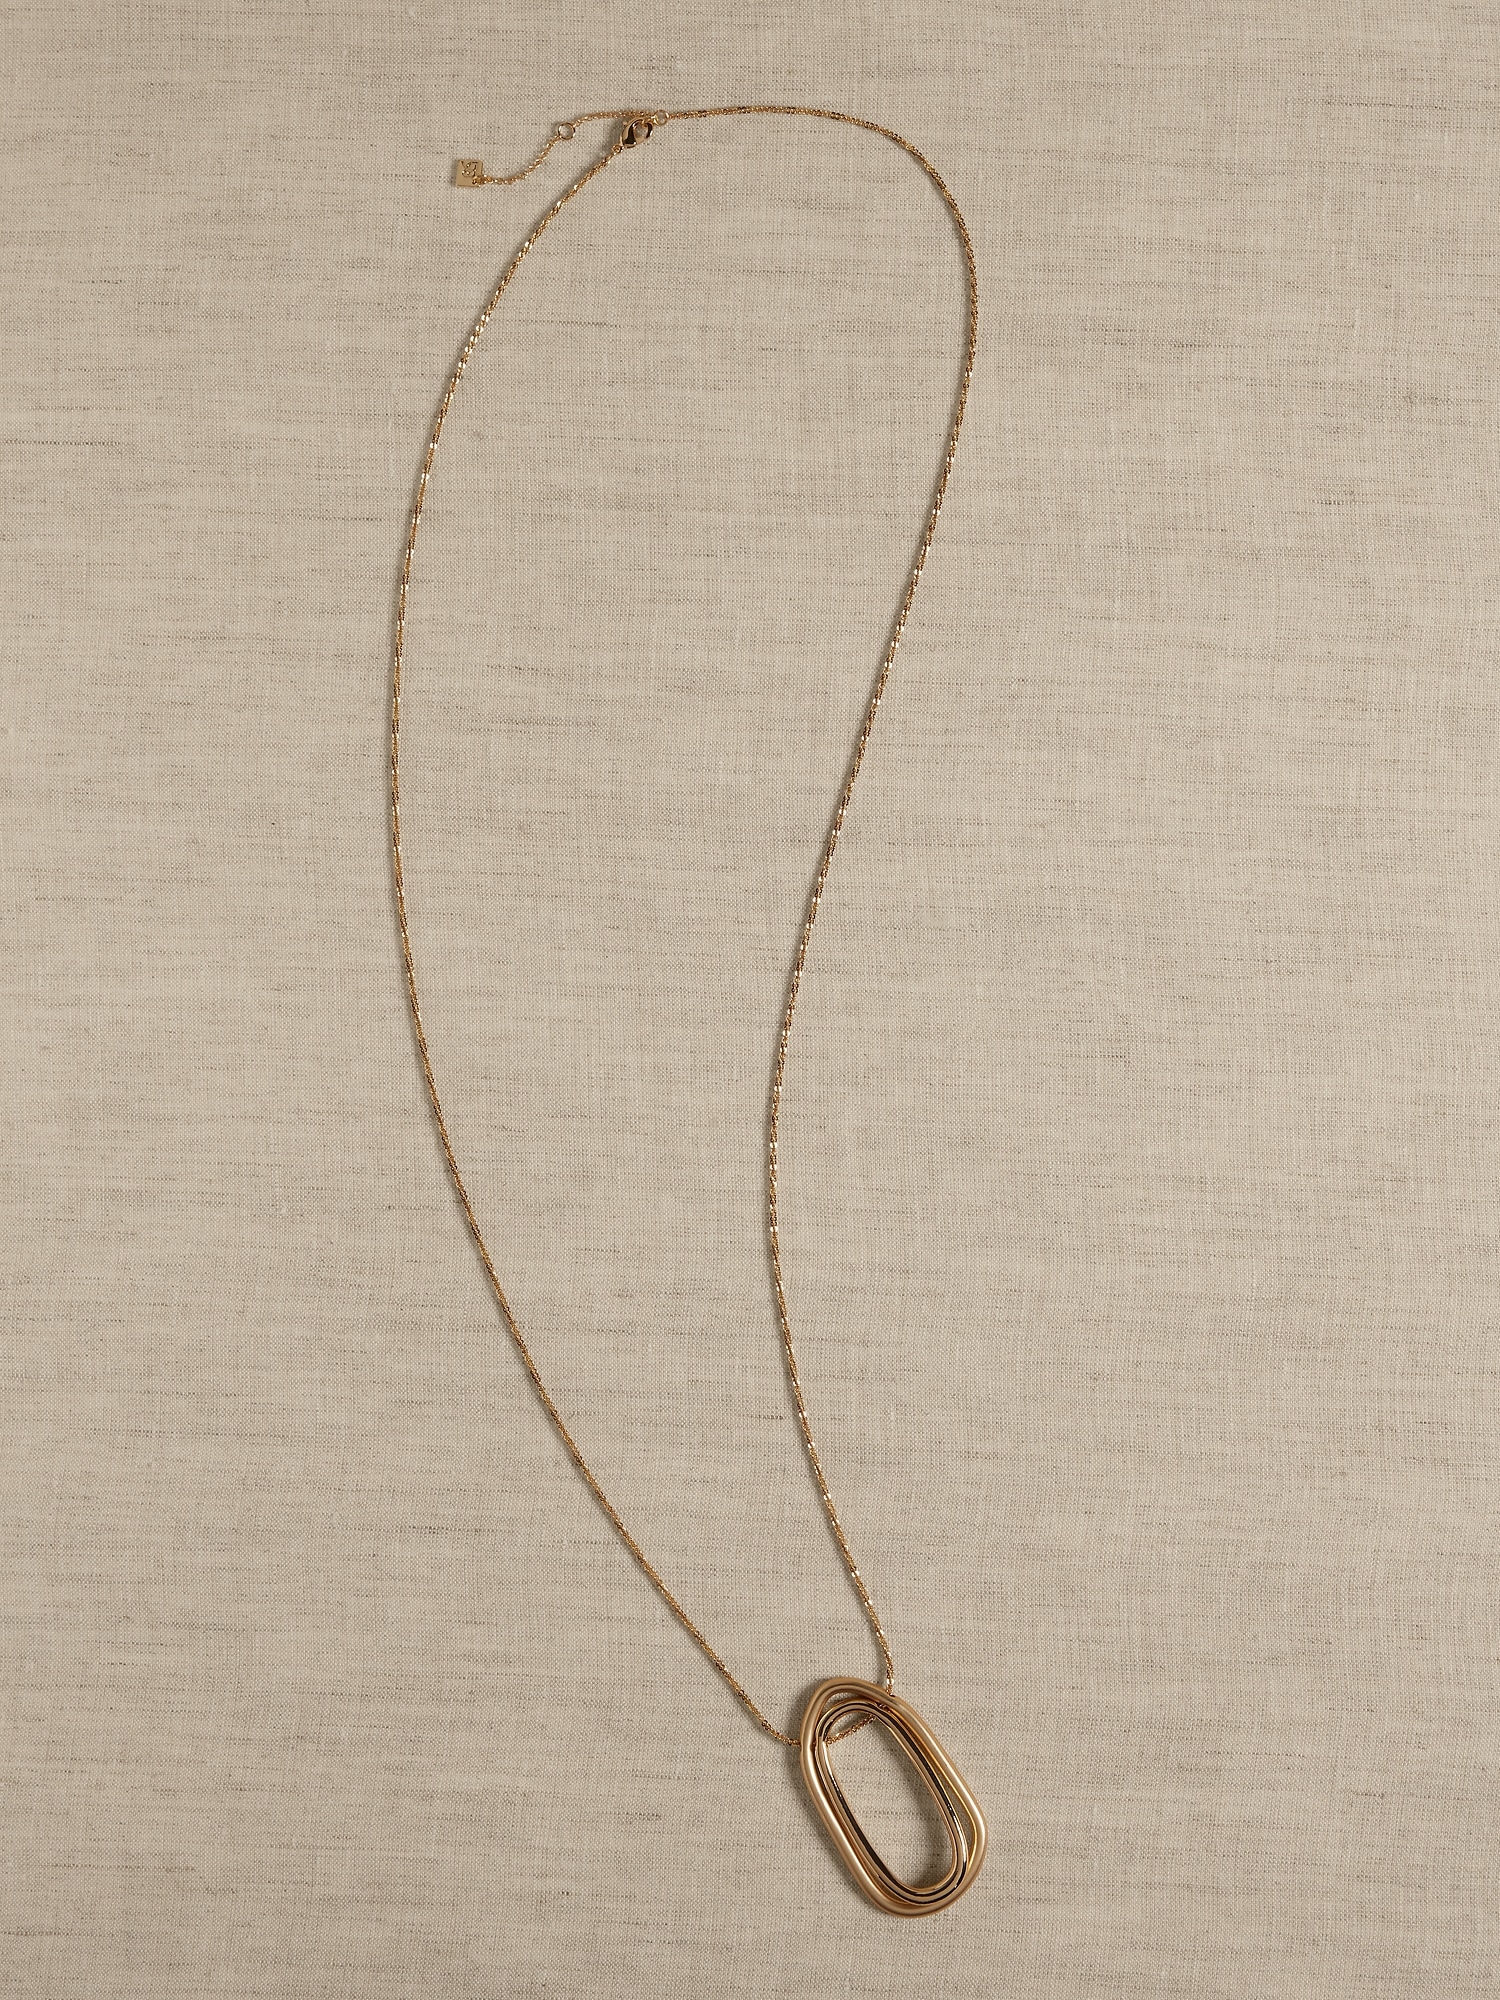 Organic Shape Pendant Necklace